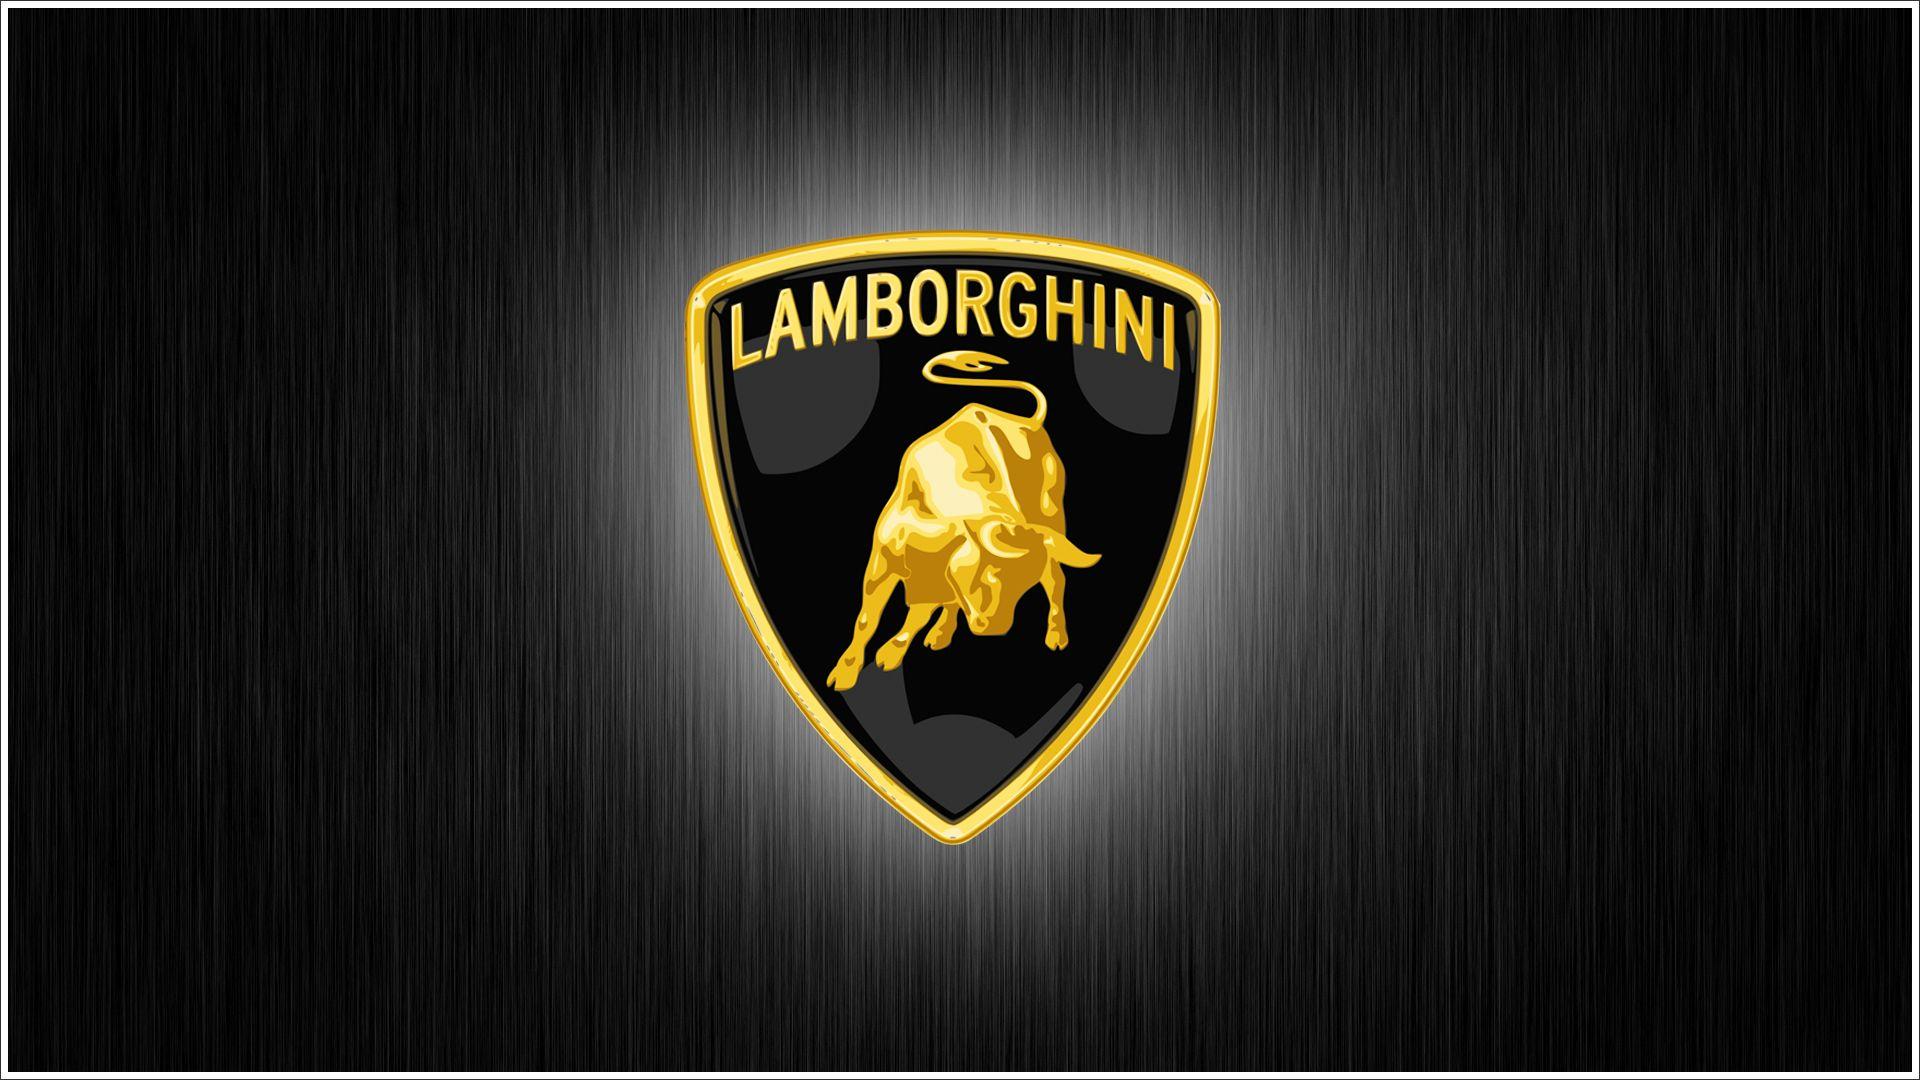 Lamorgini Logo - Lamborghini Logo Meaning and History [Lamborghini symbol]